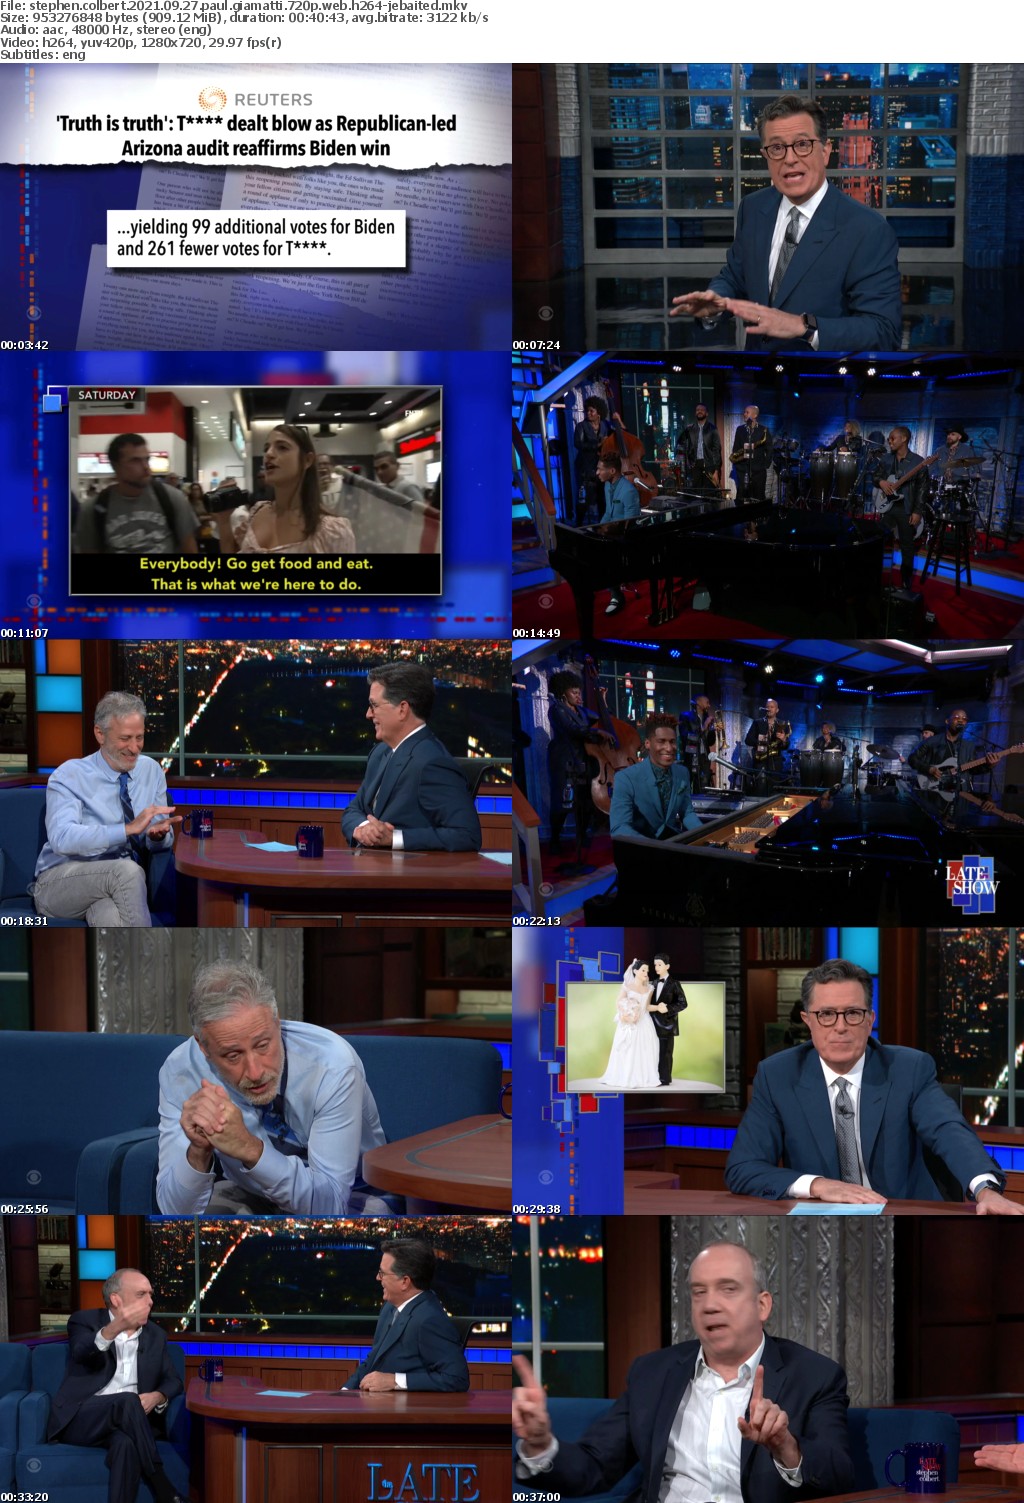 Stephen Colbert 2021 09 27 Paul Giamatti 720p WEB H264-JEBAITED